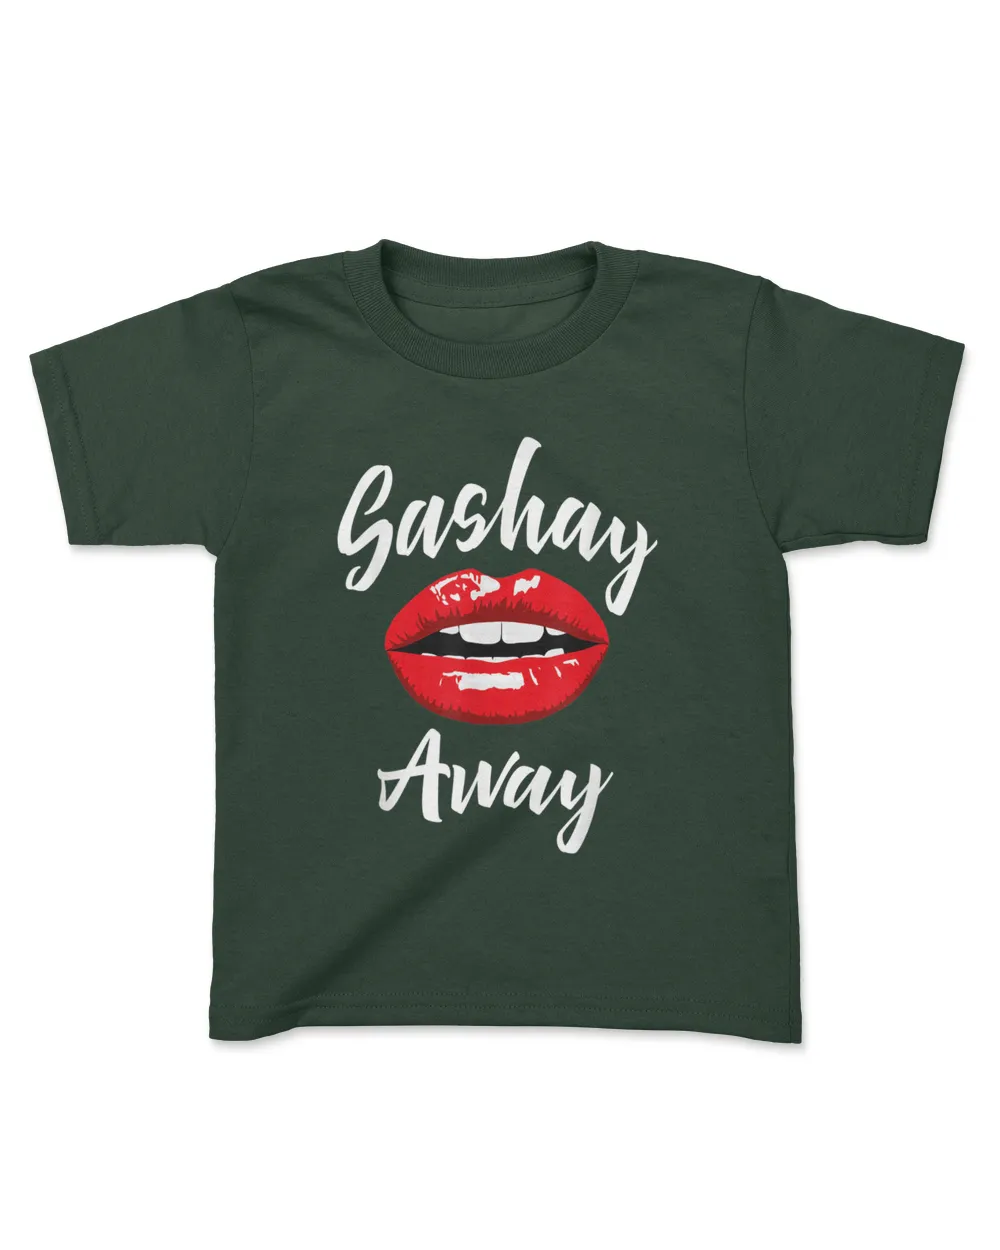 Sashay Away - Red Lips - Drag Sassy Novelty Tee